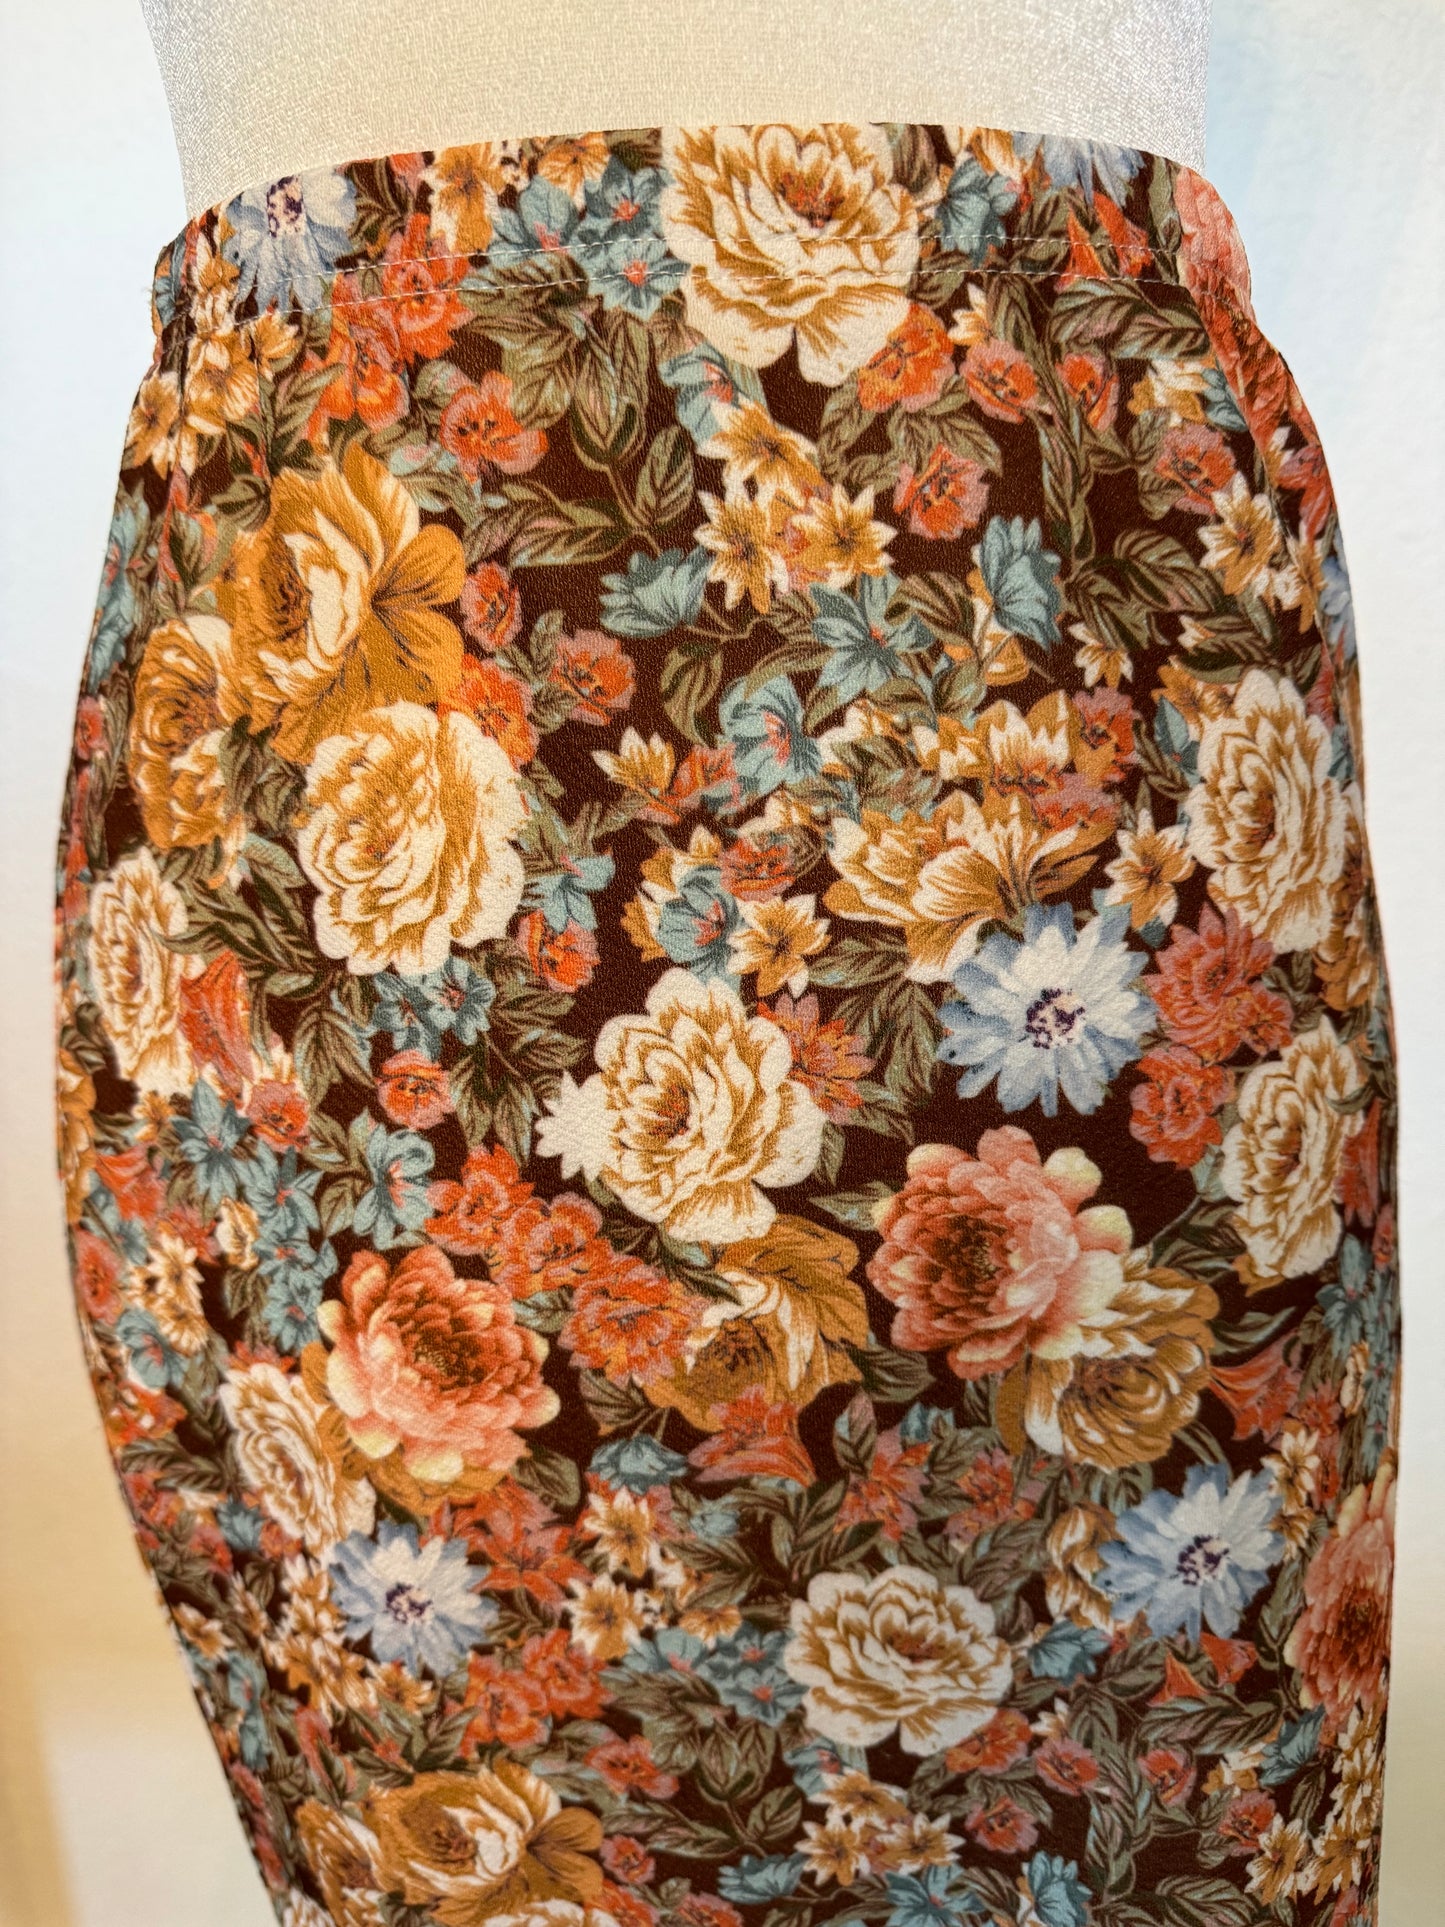 Shein Multicolor Floral Pencil Skirt